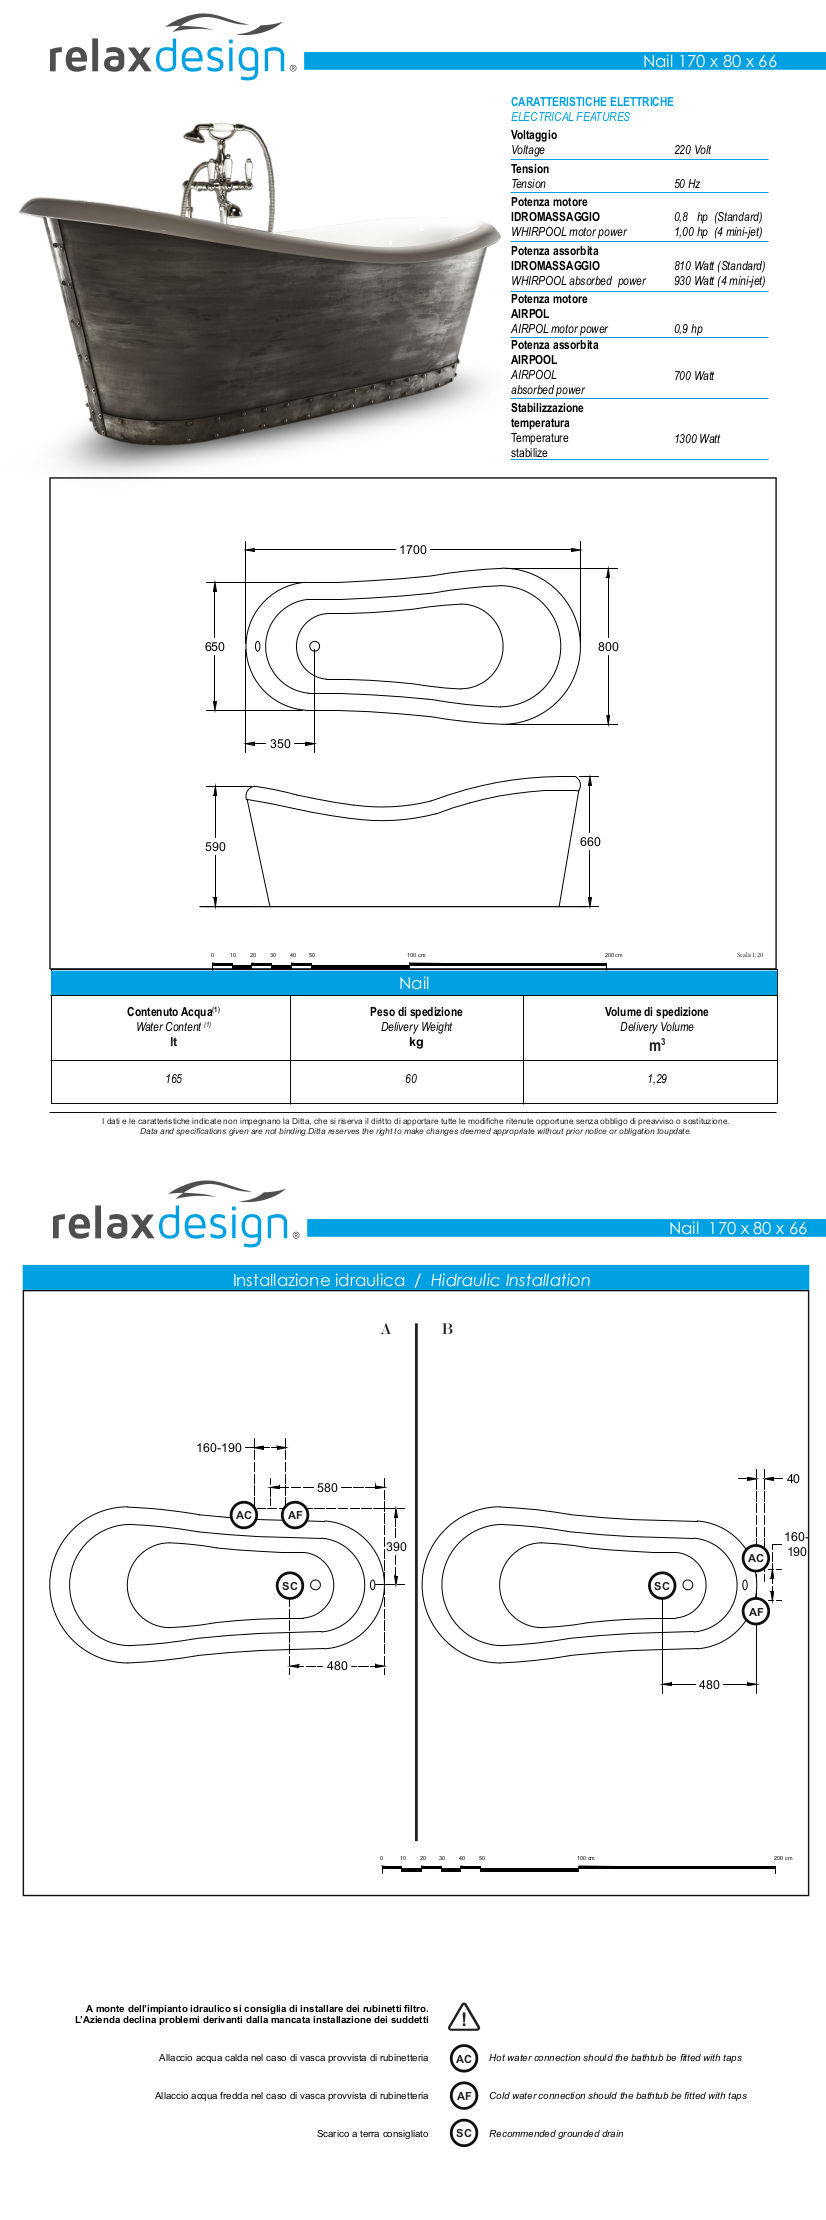 nail relax bathtub design data sheet